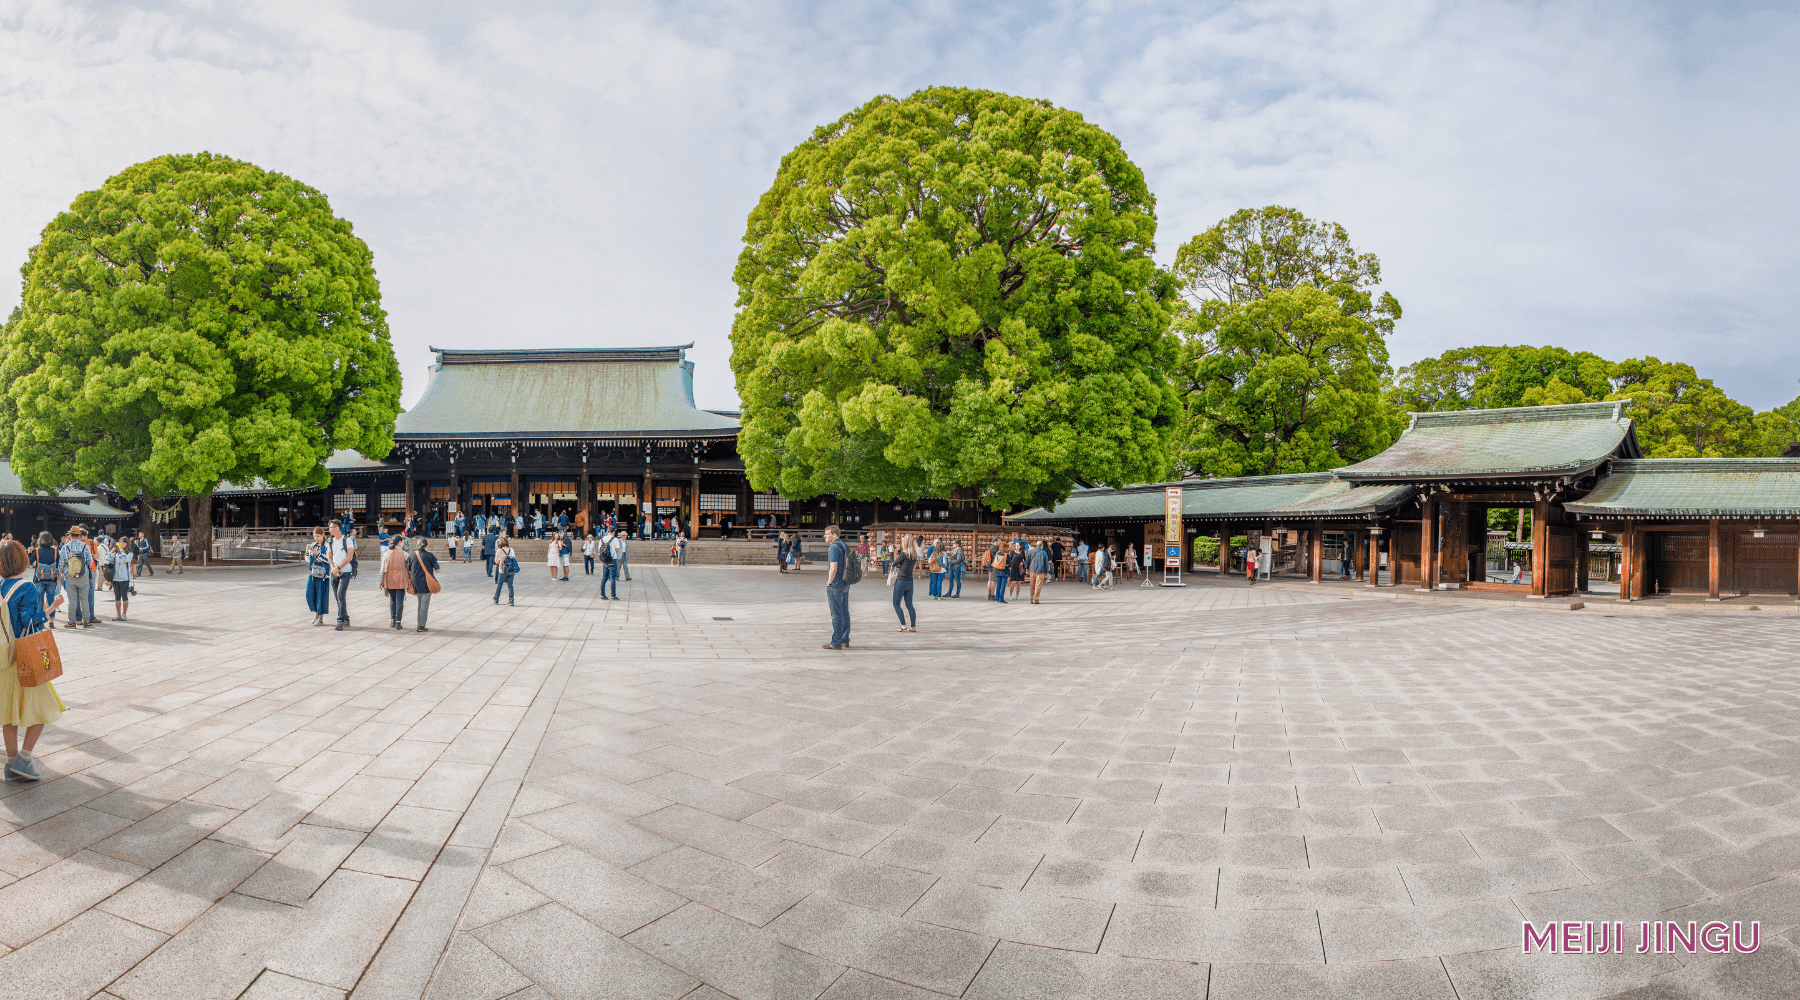 Hình đền Meiji